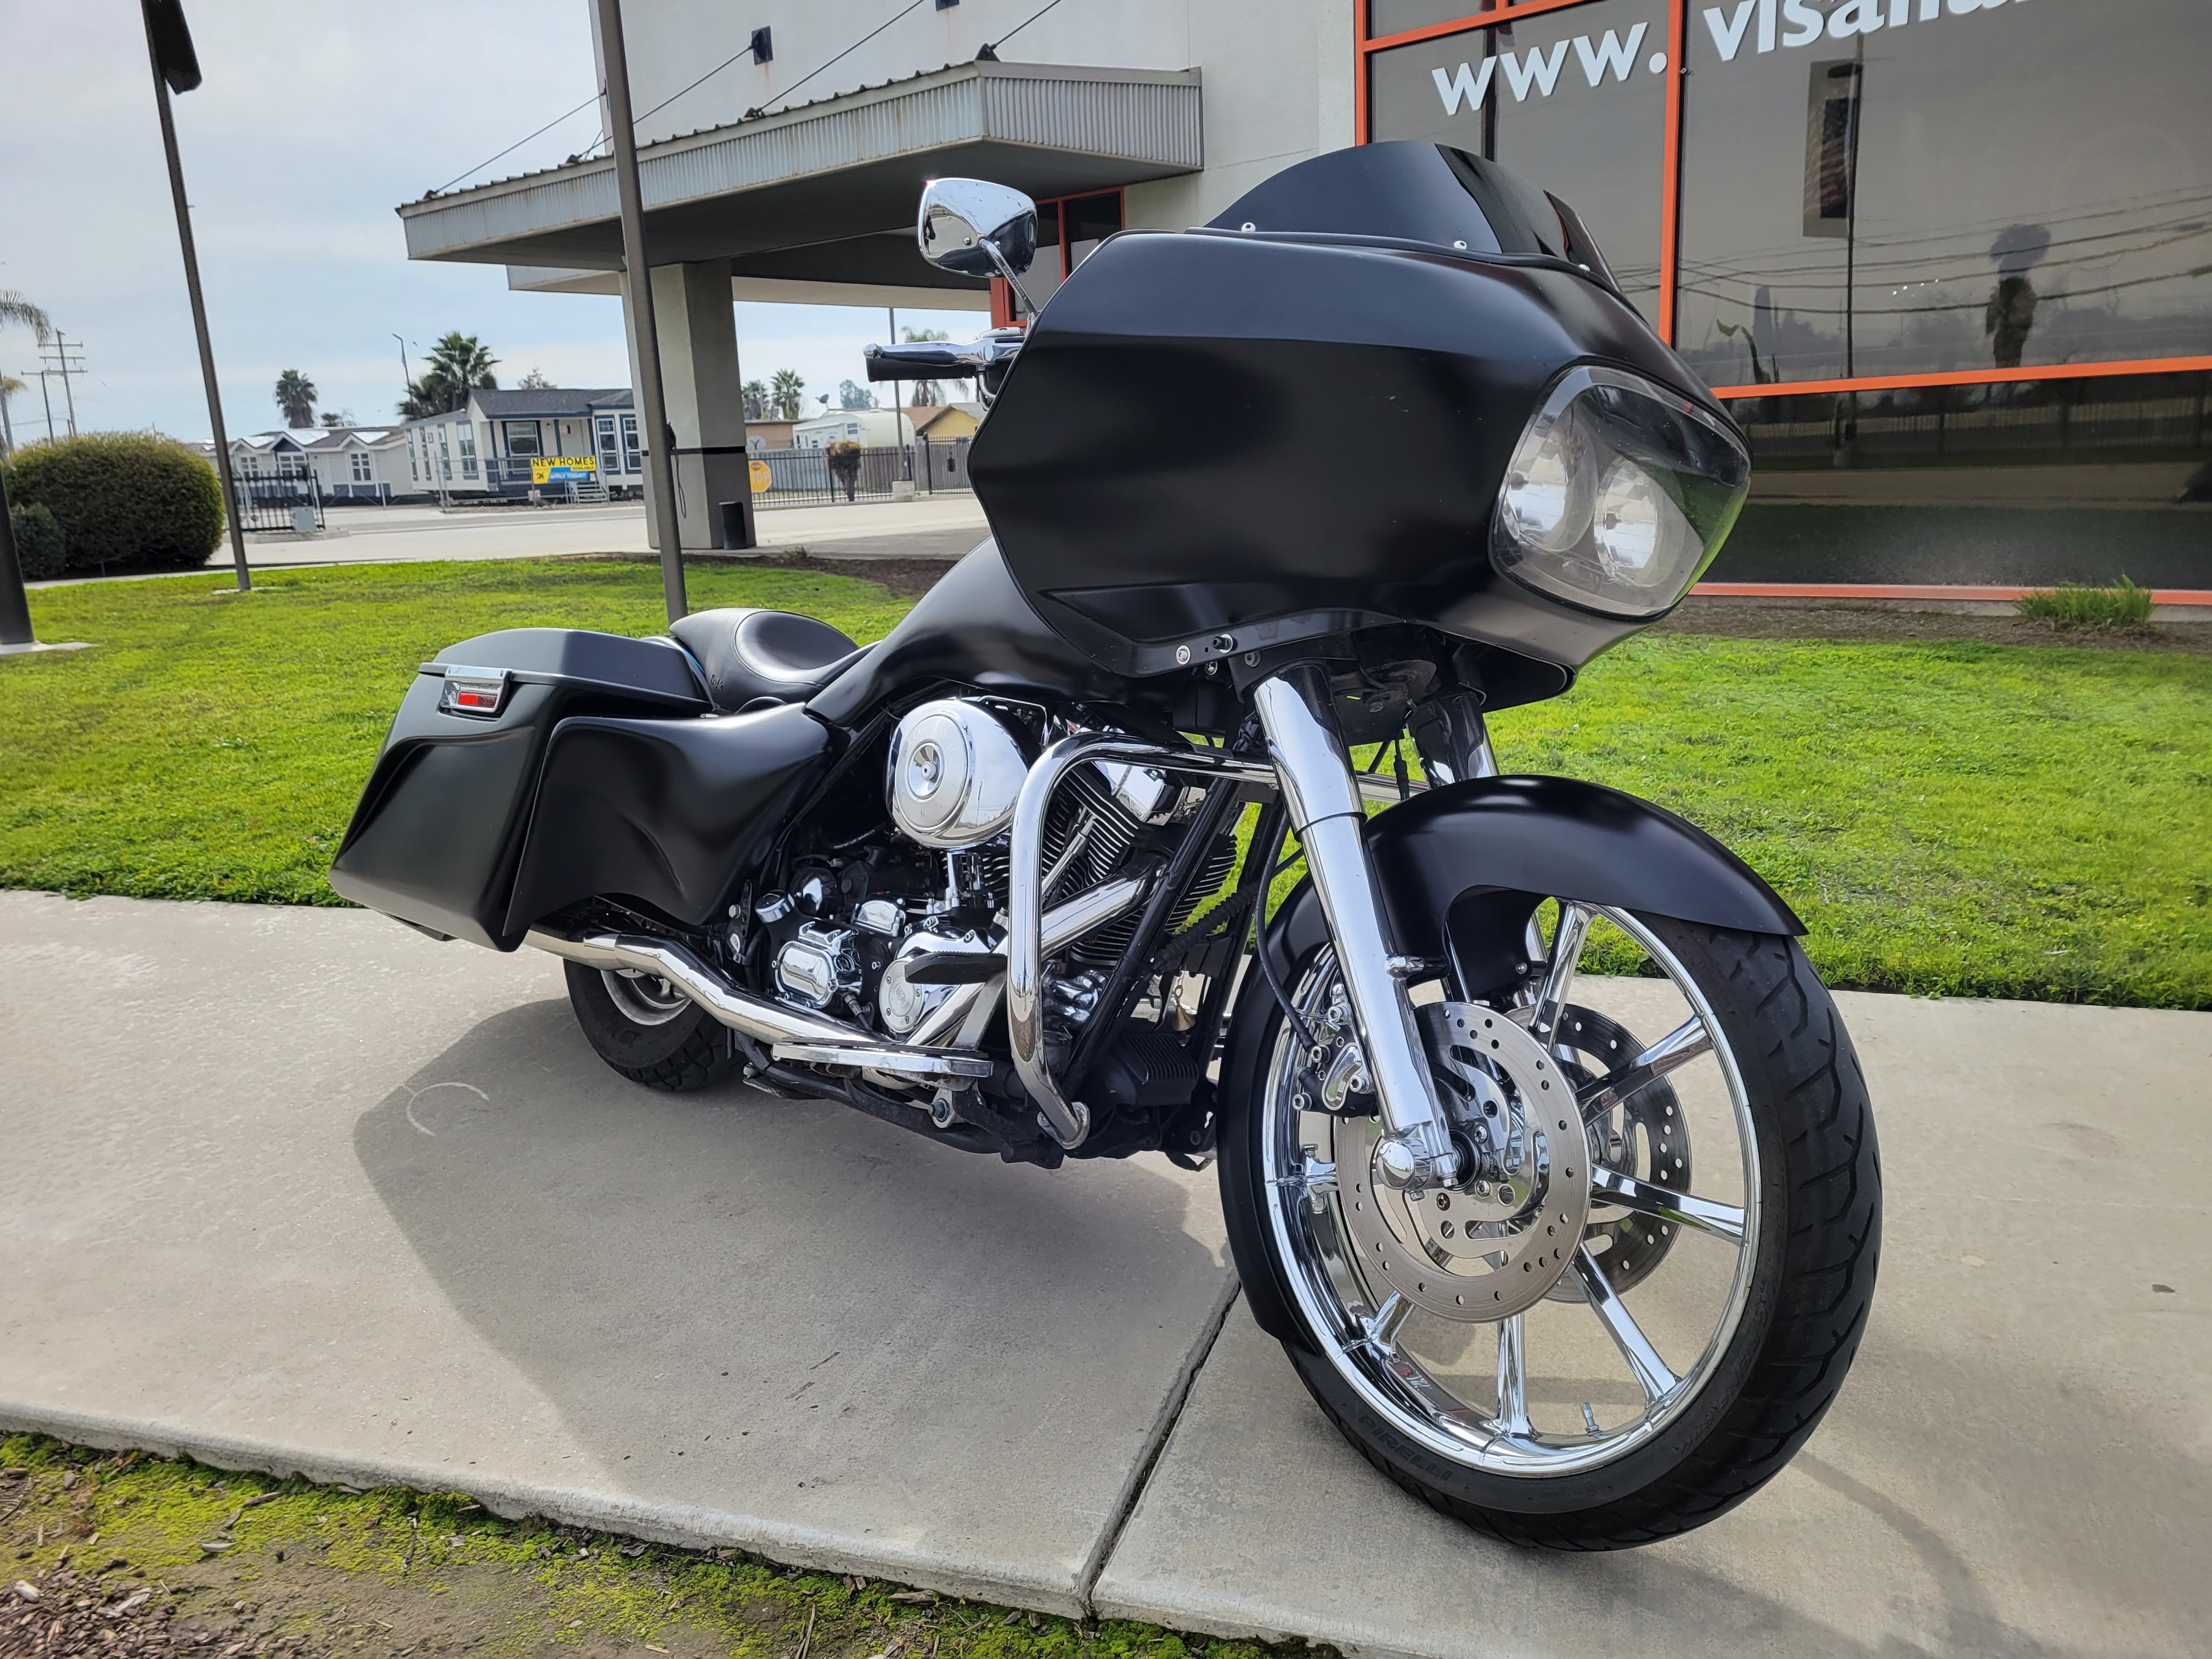 2000 Harley-Davidson FLTR at Visalia Harley-Davidson